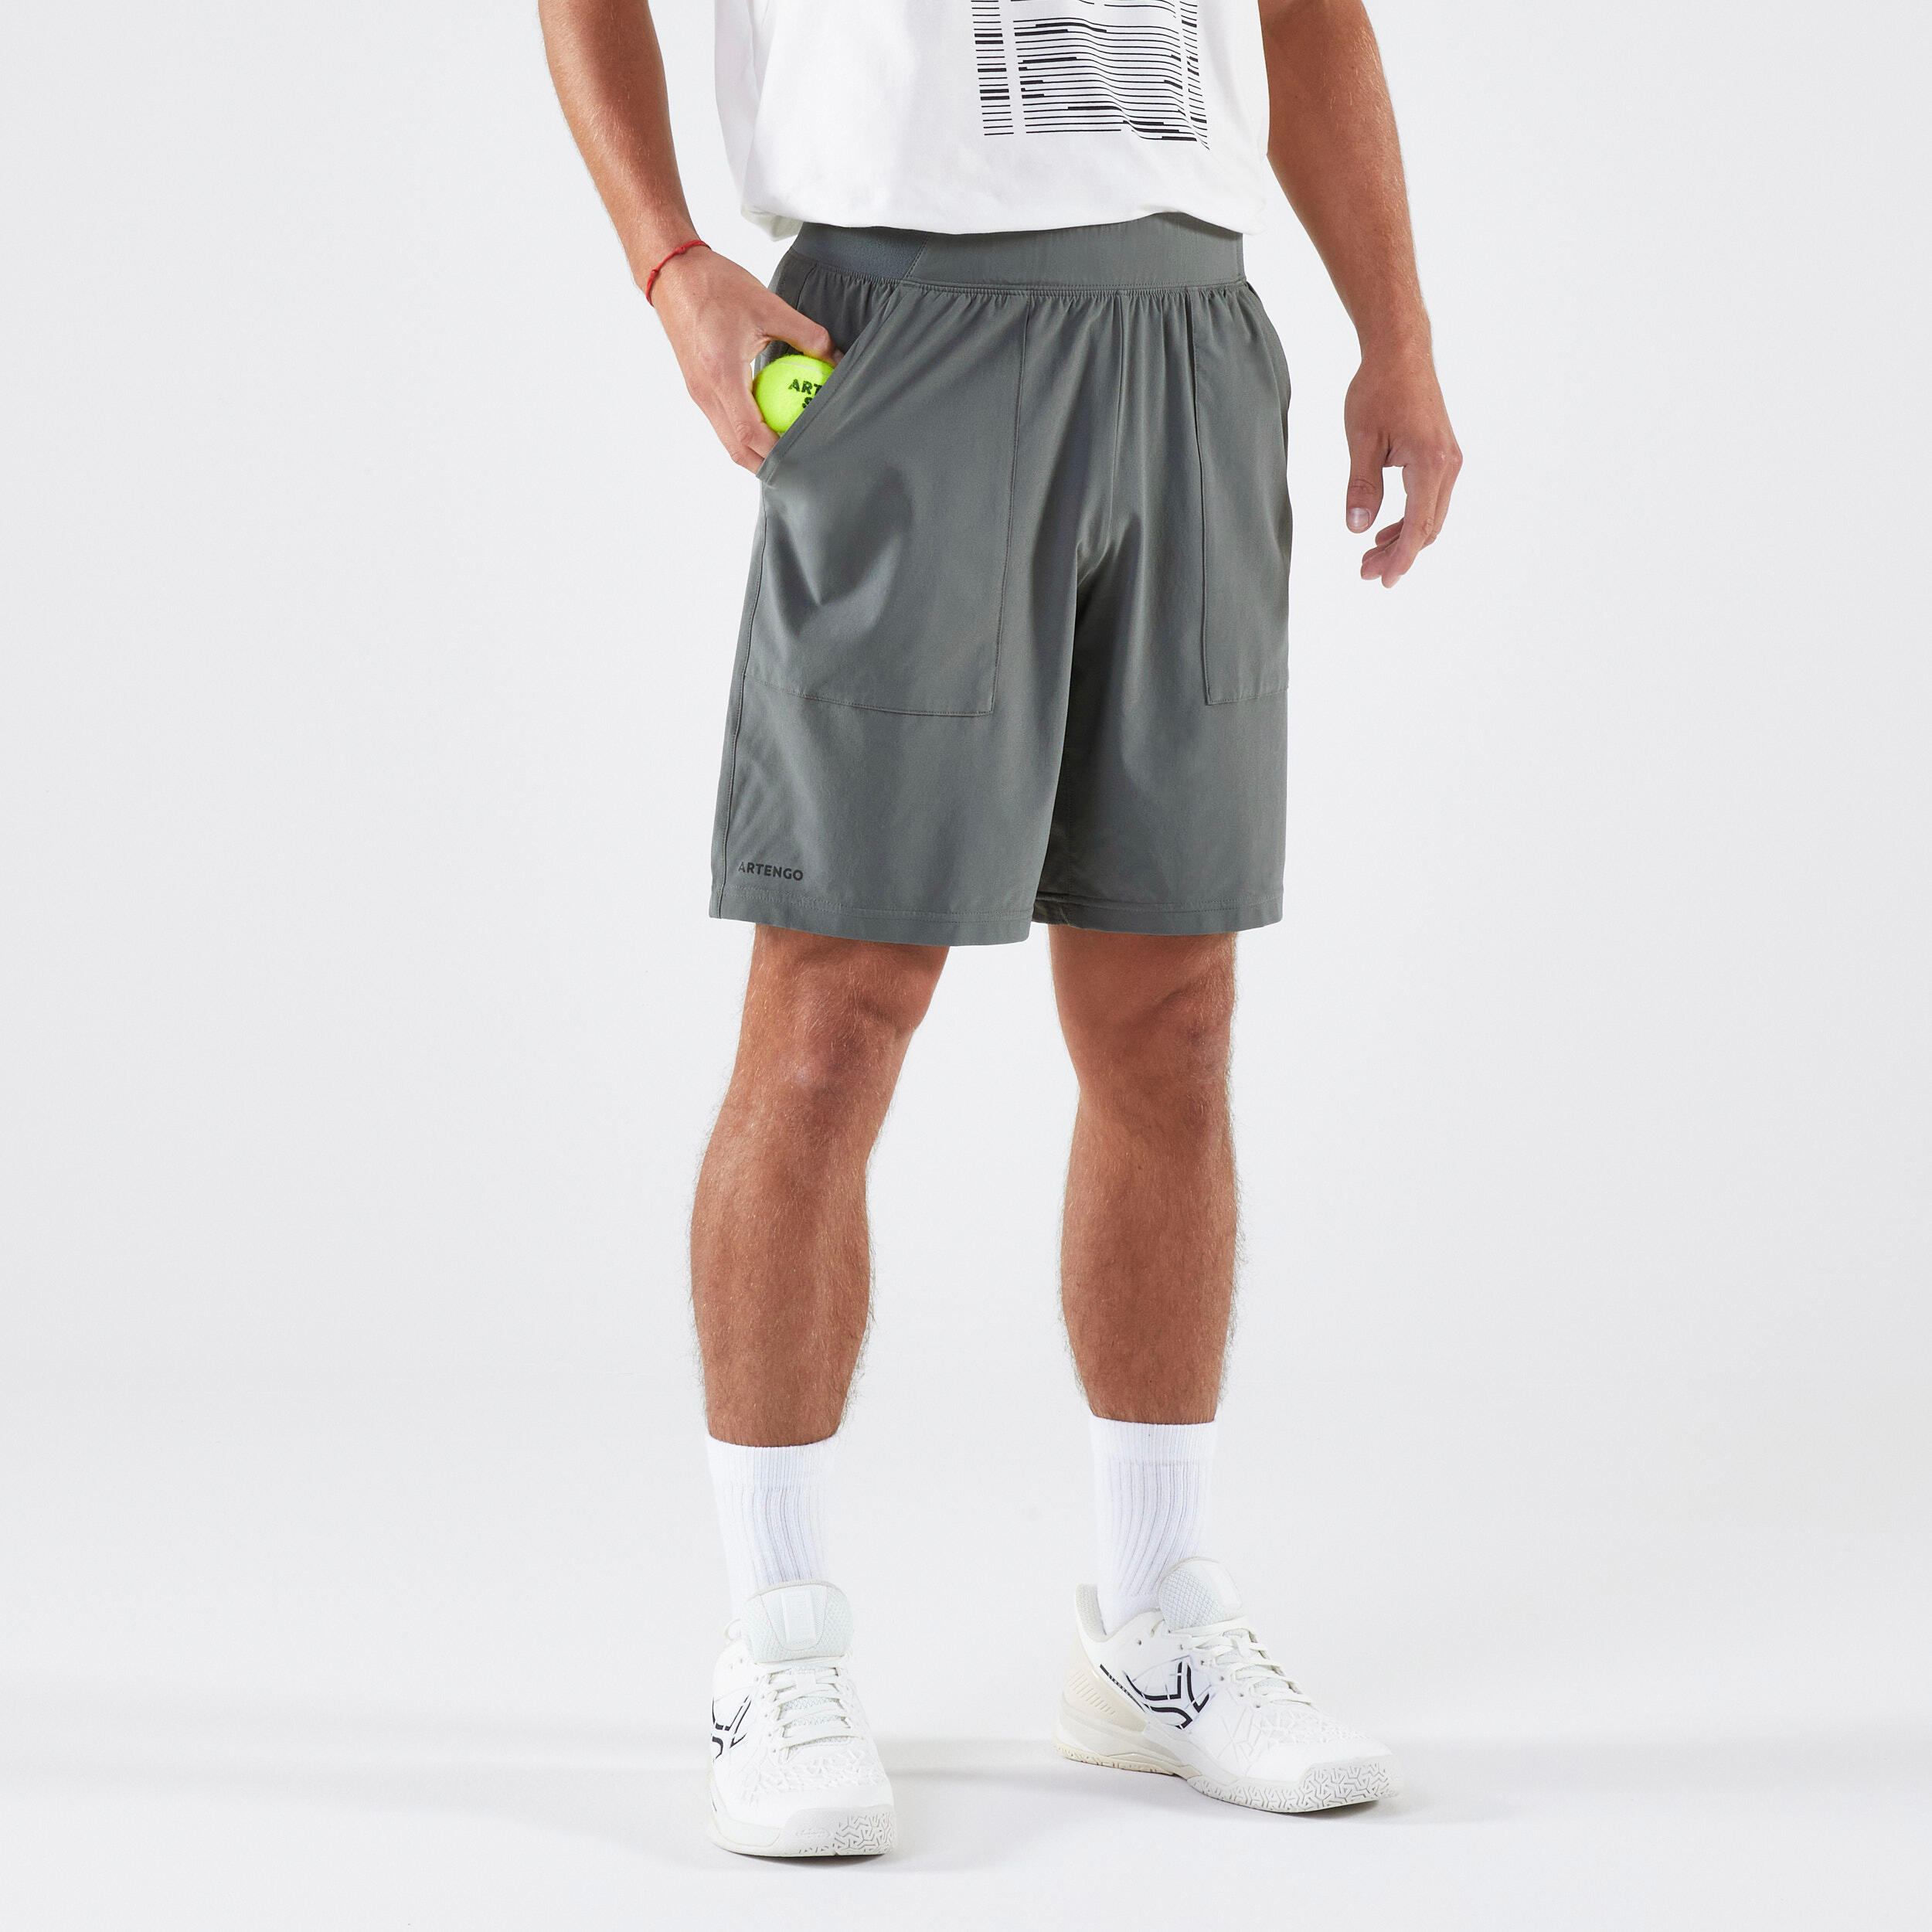 ARTENGO Men's Breathable Tennis Shorts Dry - Khaki